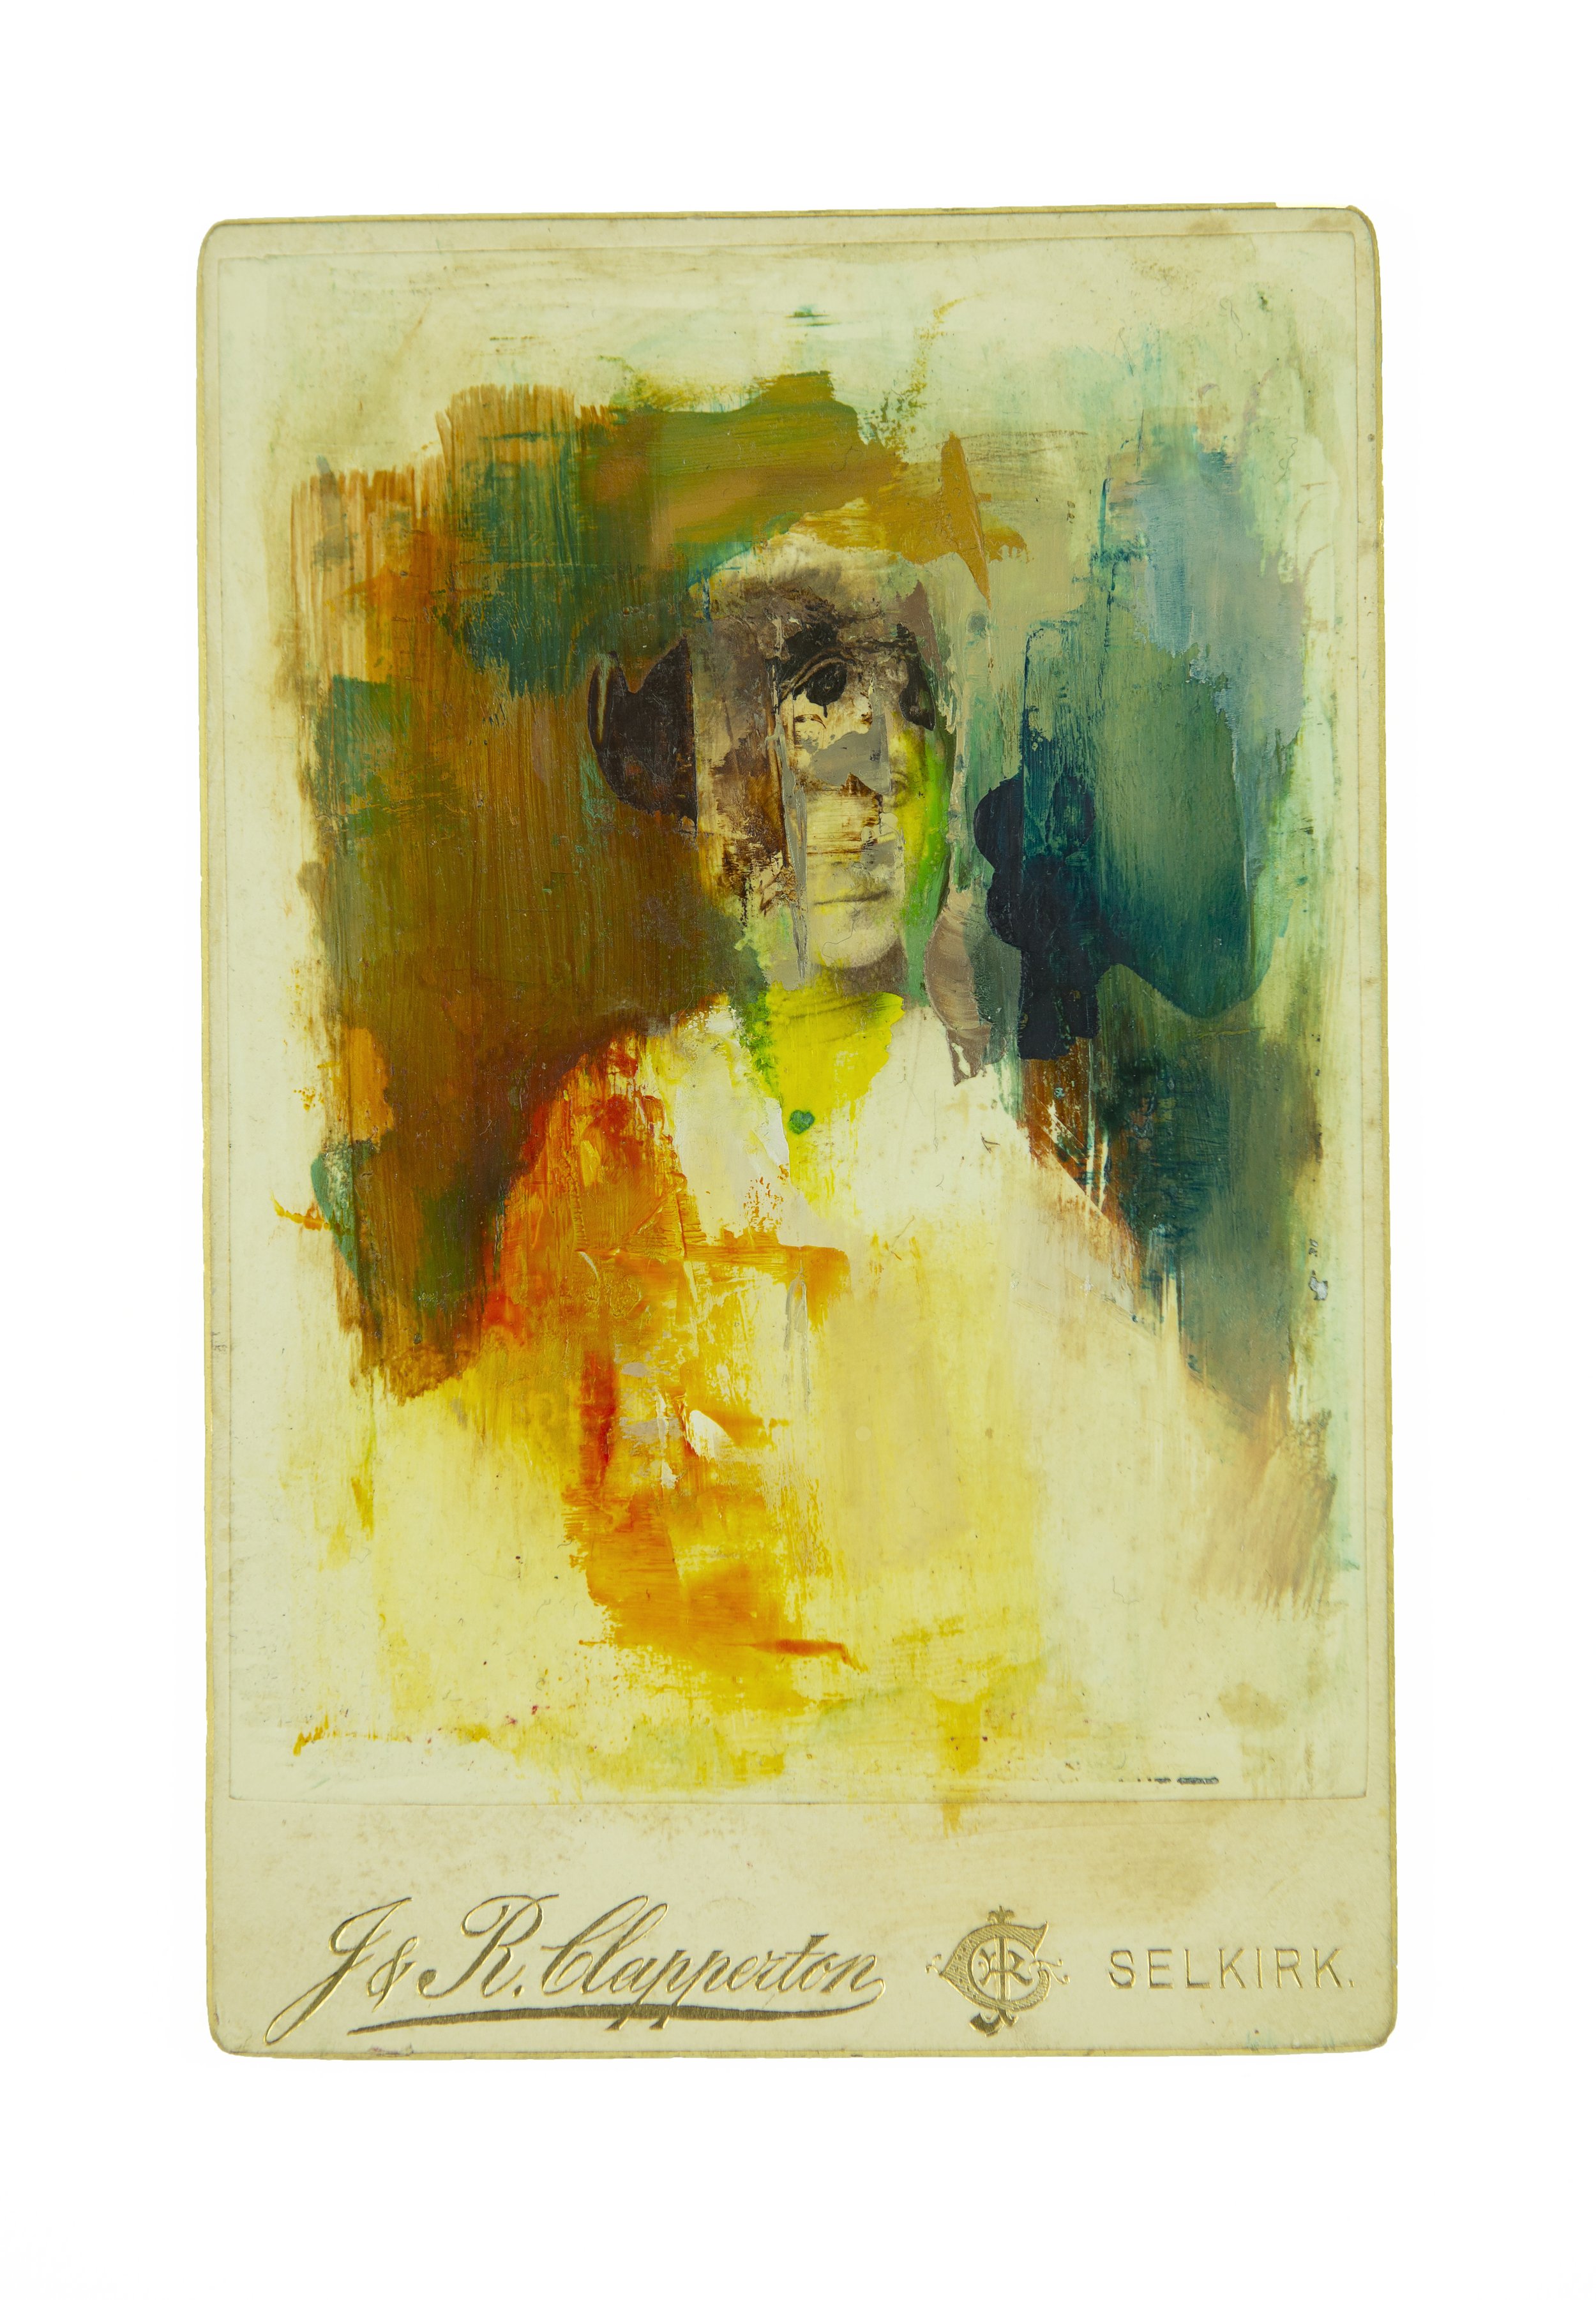 43. Suspendisse III (J & R Clapperton). 2022. Oil on vintage cabinet card. 16 X 10 cm.jpg